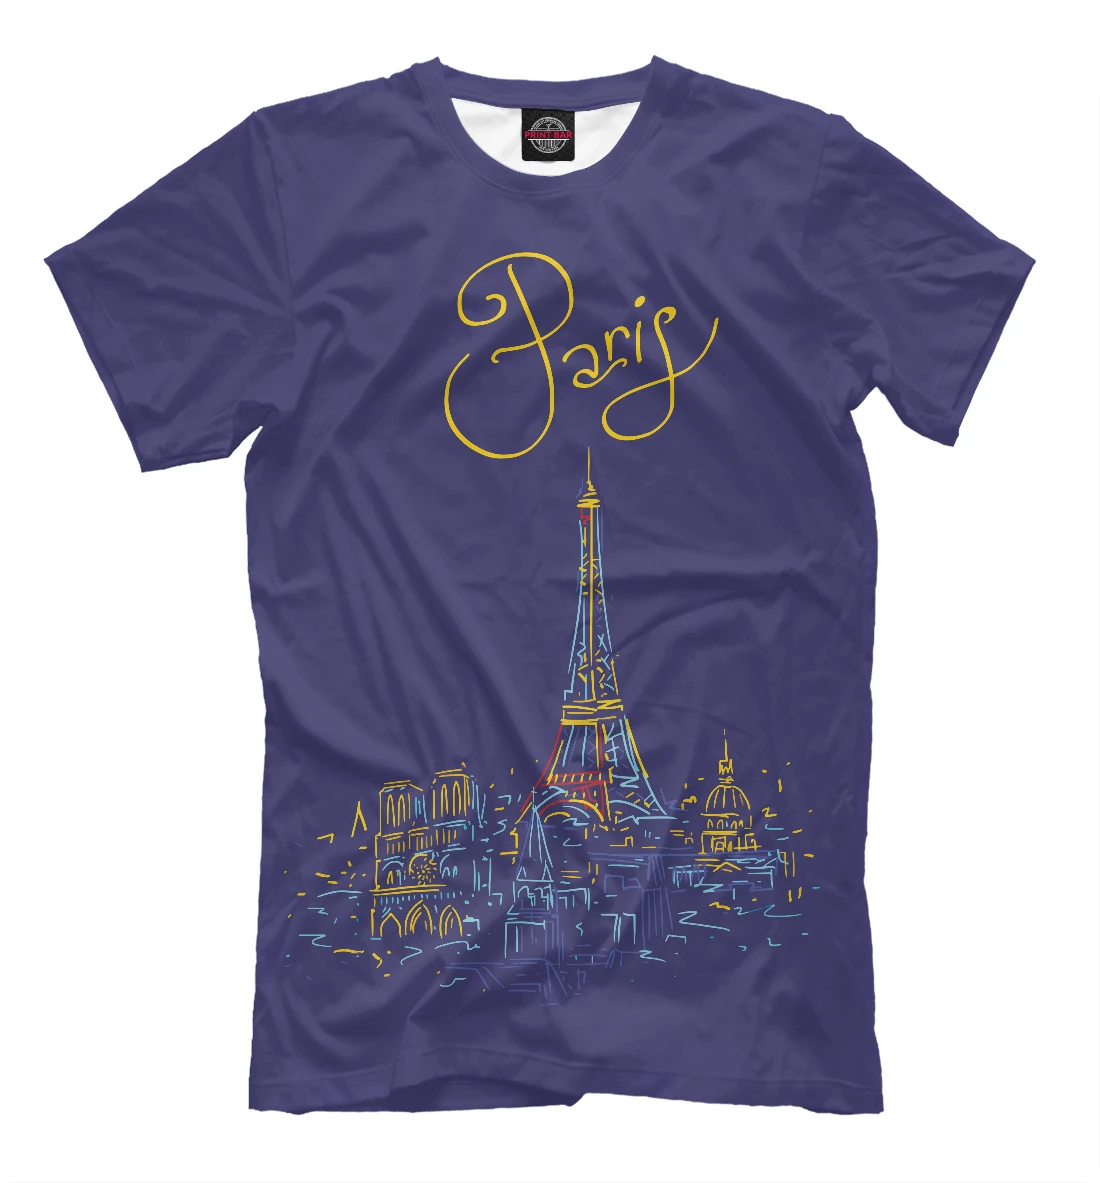 Рубашка парижского хулигана 4. Майка Париж. Майка Paris. Paris 2008 футболка.